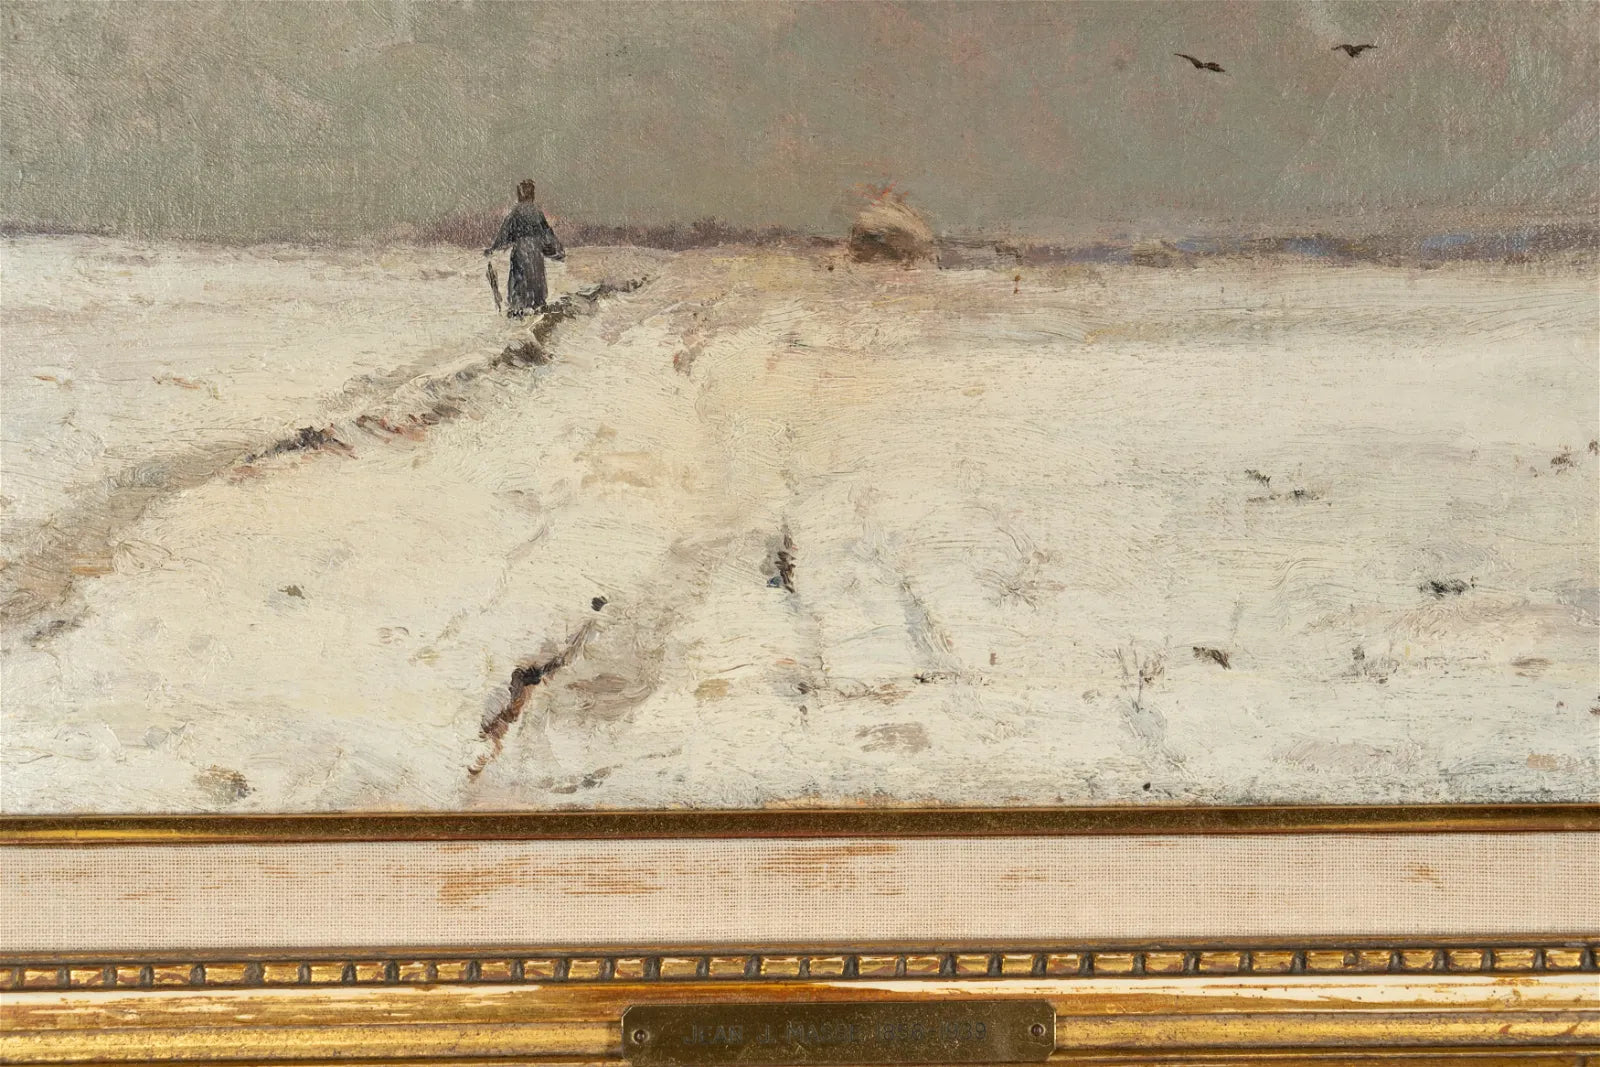 AW481: Impressionist Promenade en Hiver (Walk in Winter) Jean Eugene Julien Masse (1856 - 1950) Oil on Canvas